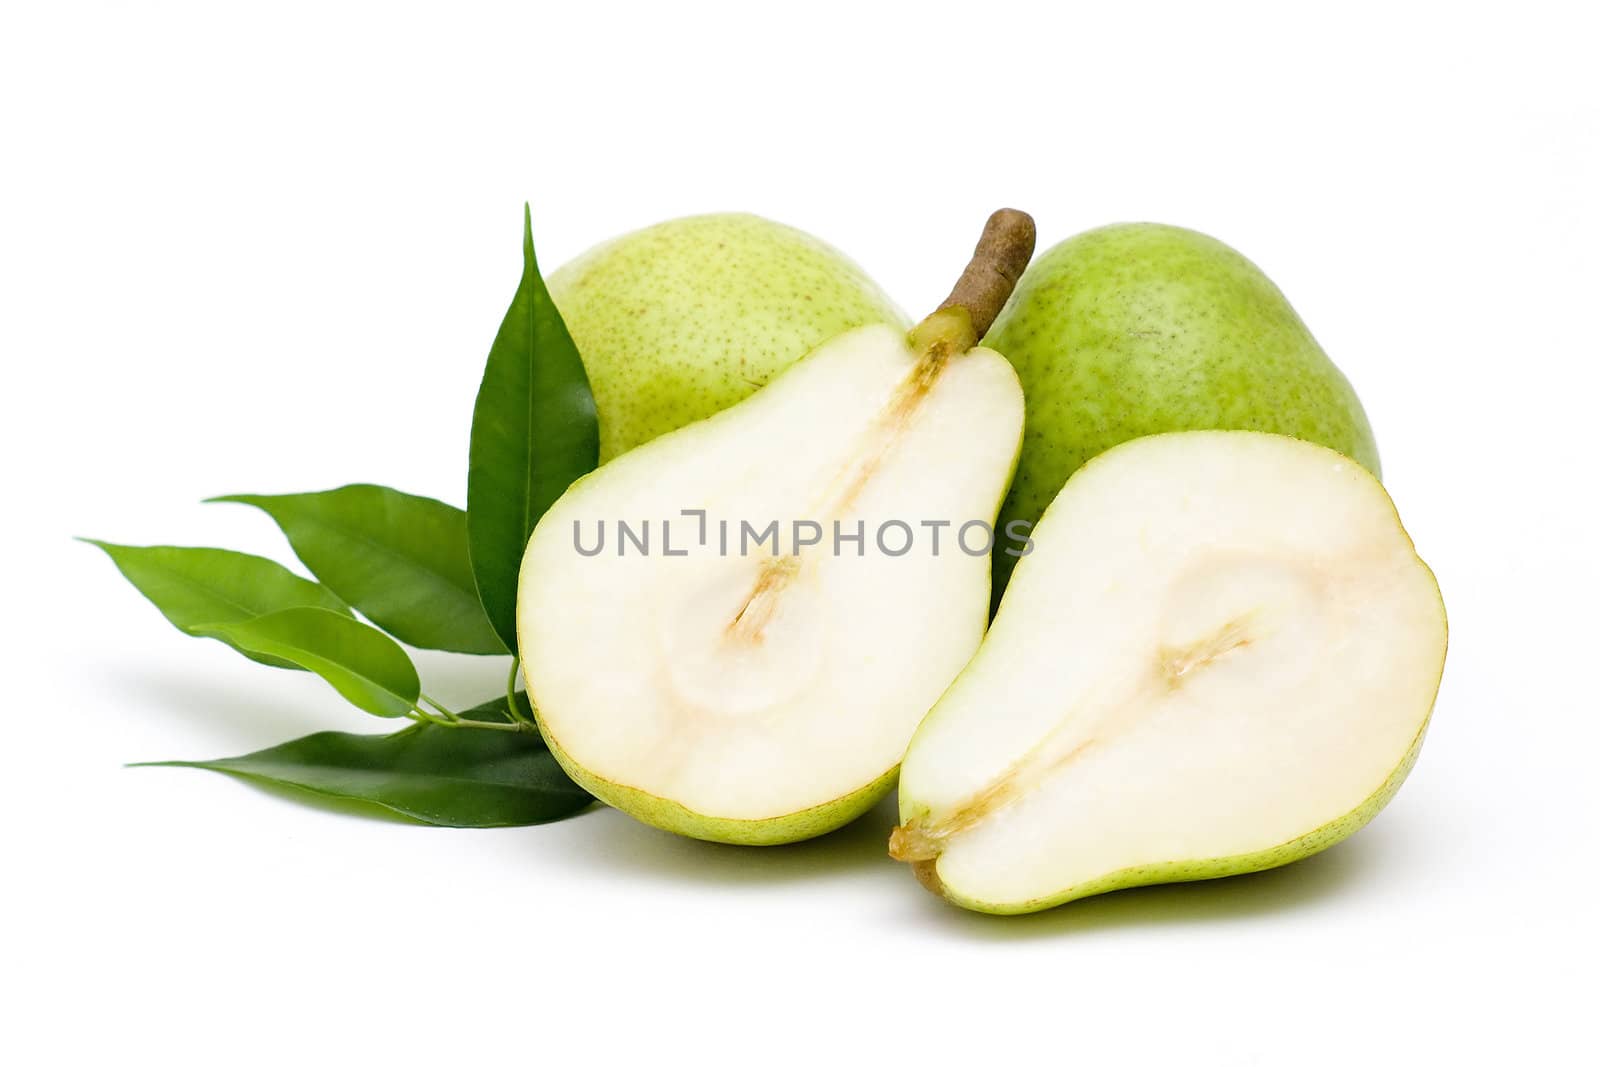 green pears by miradrozdowski